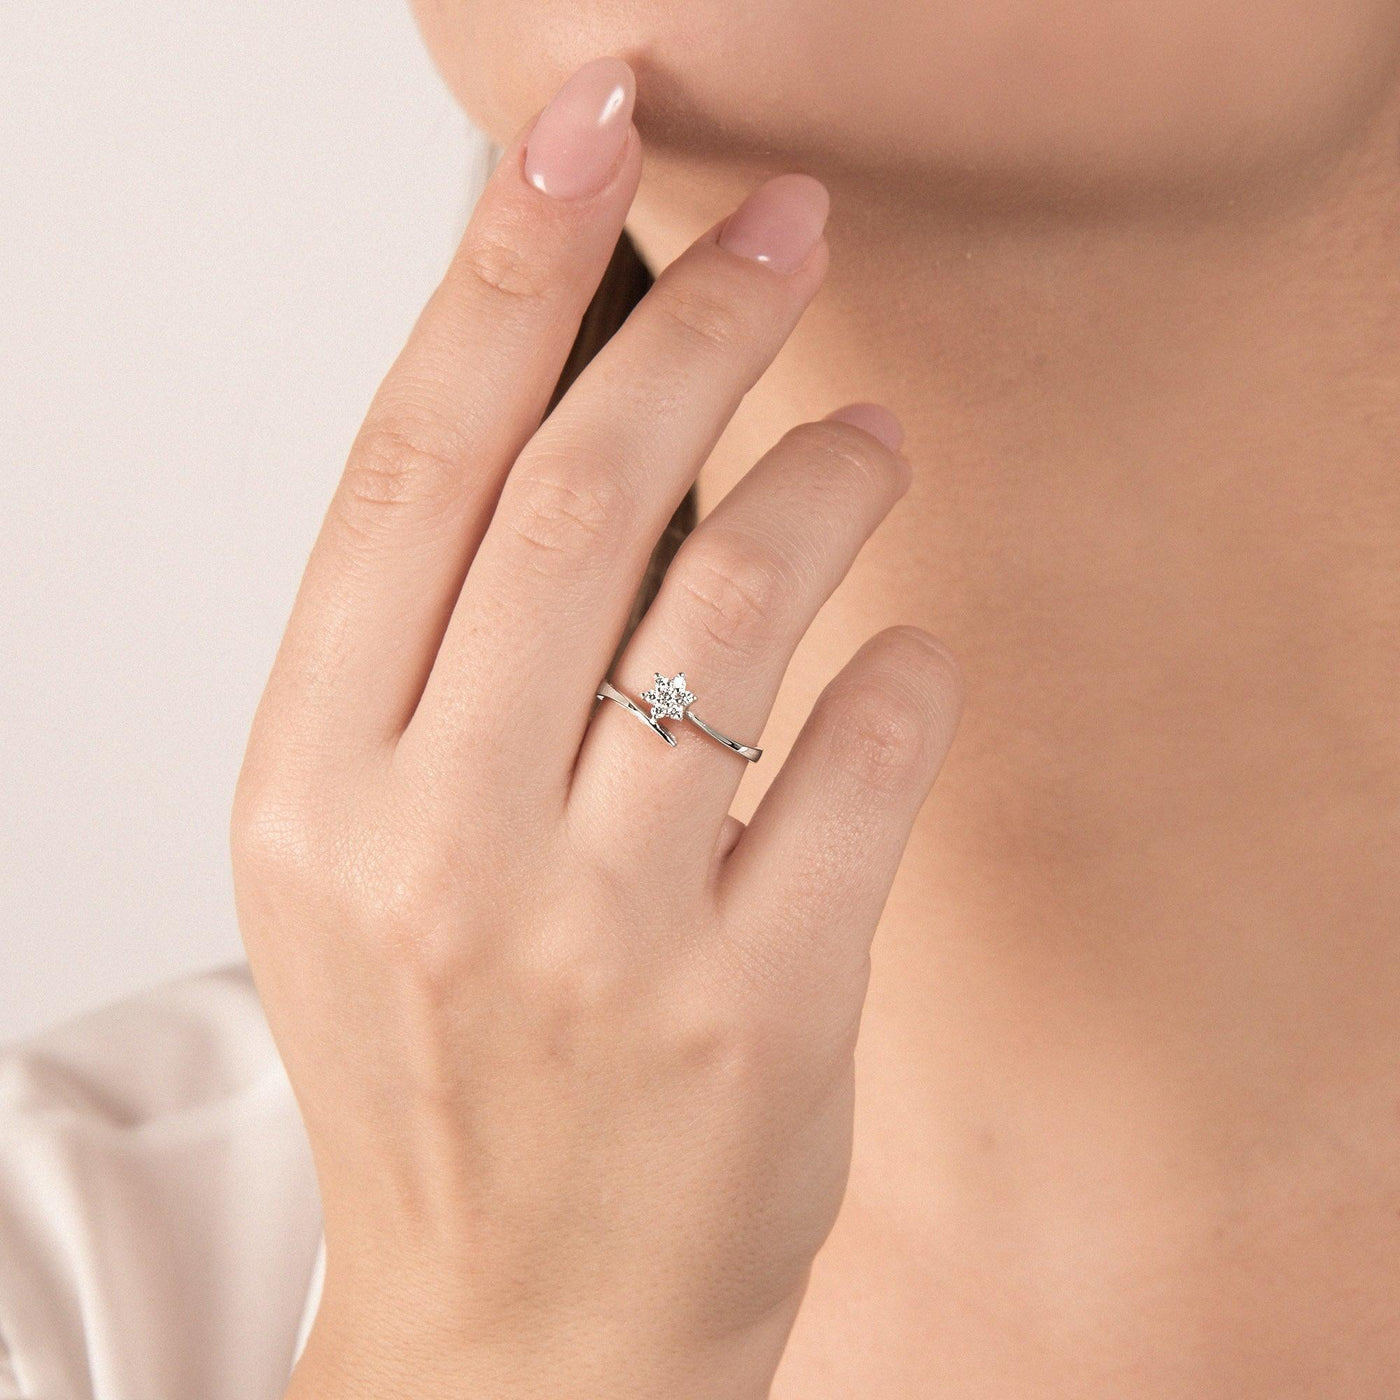 Flower Ring with 0.11ct diamonds - Moregola Fine Jewelry